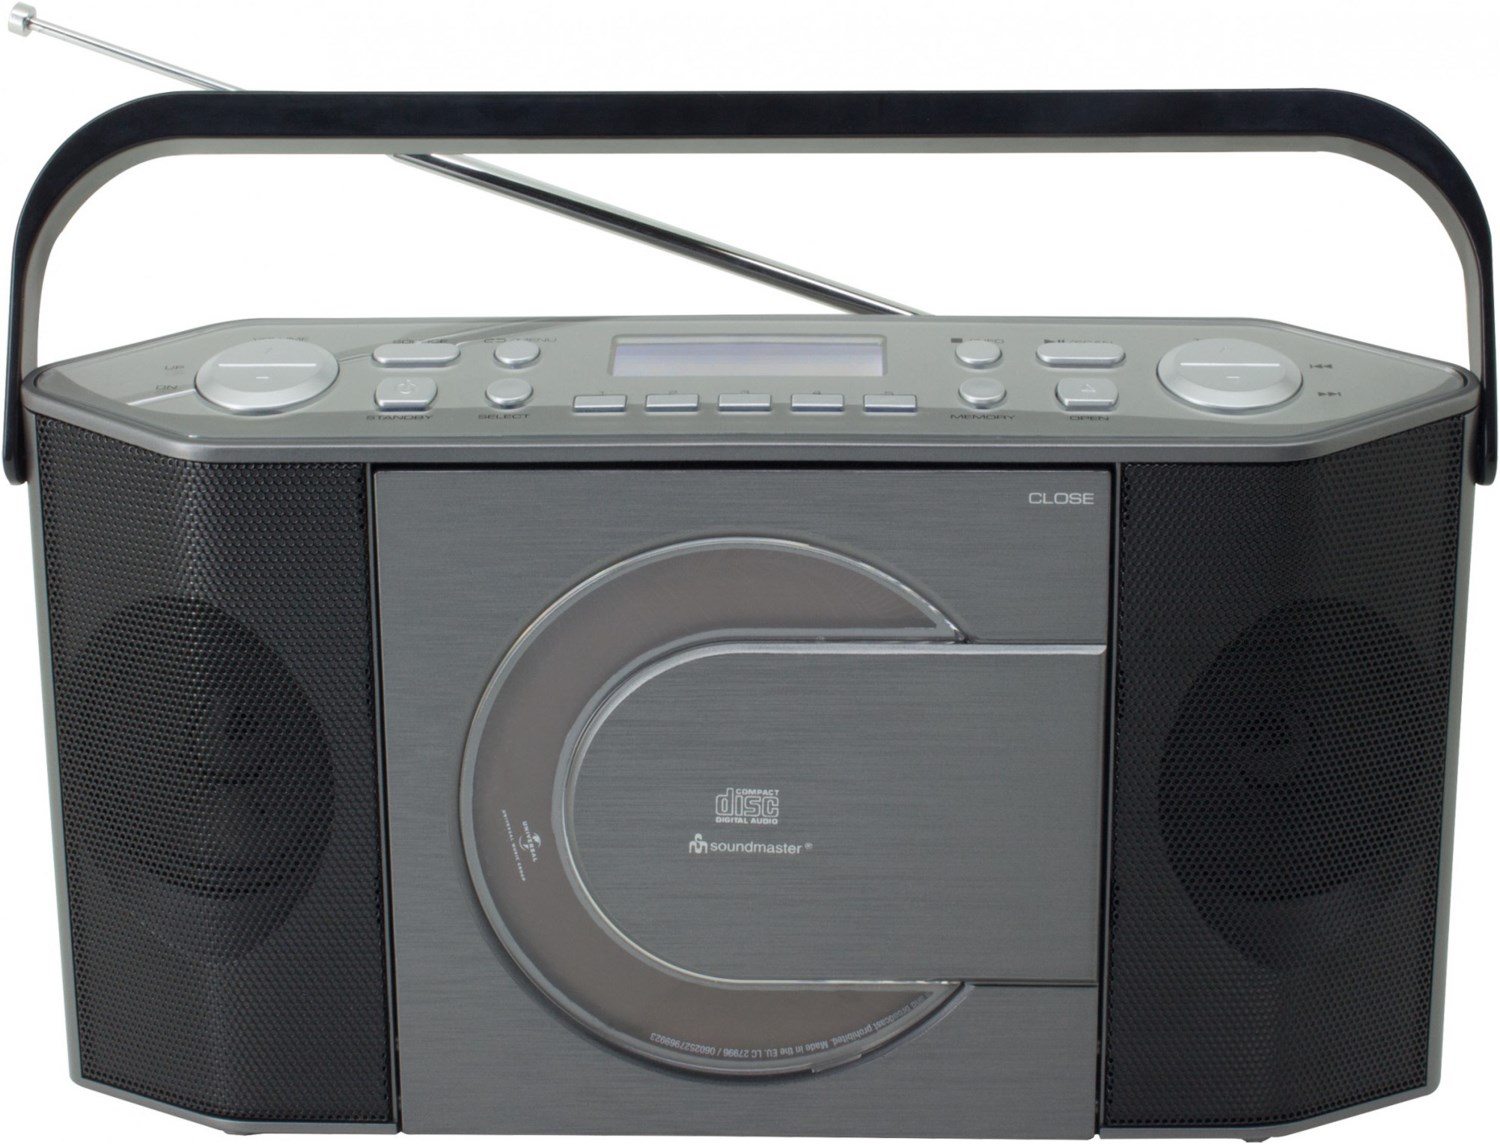 RCD 1770 AN CD/Radio-System